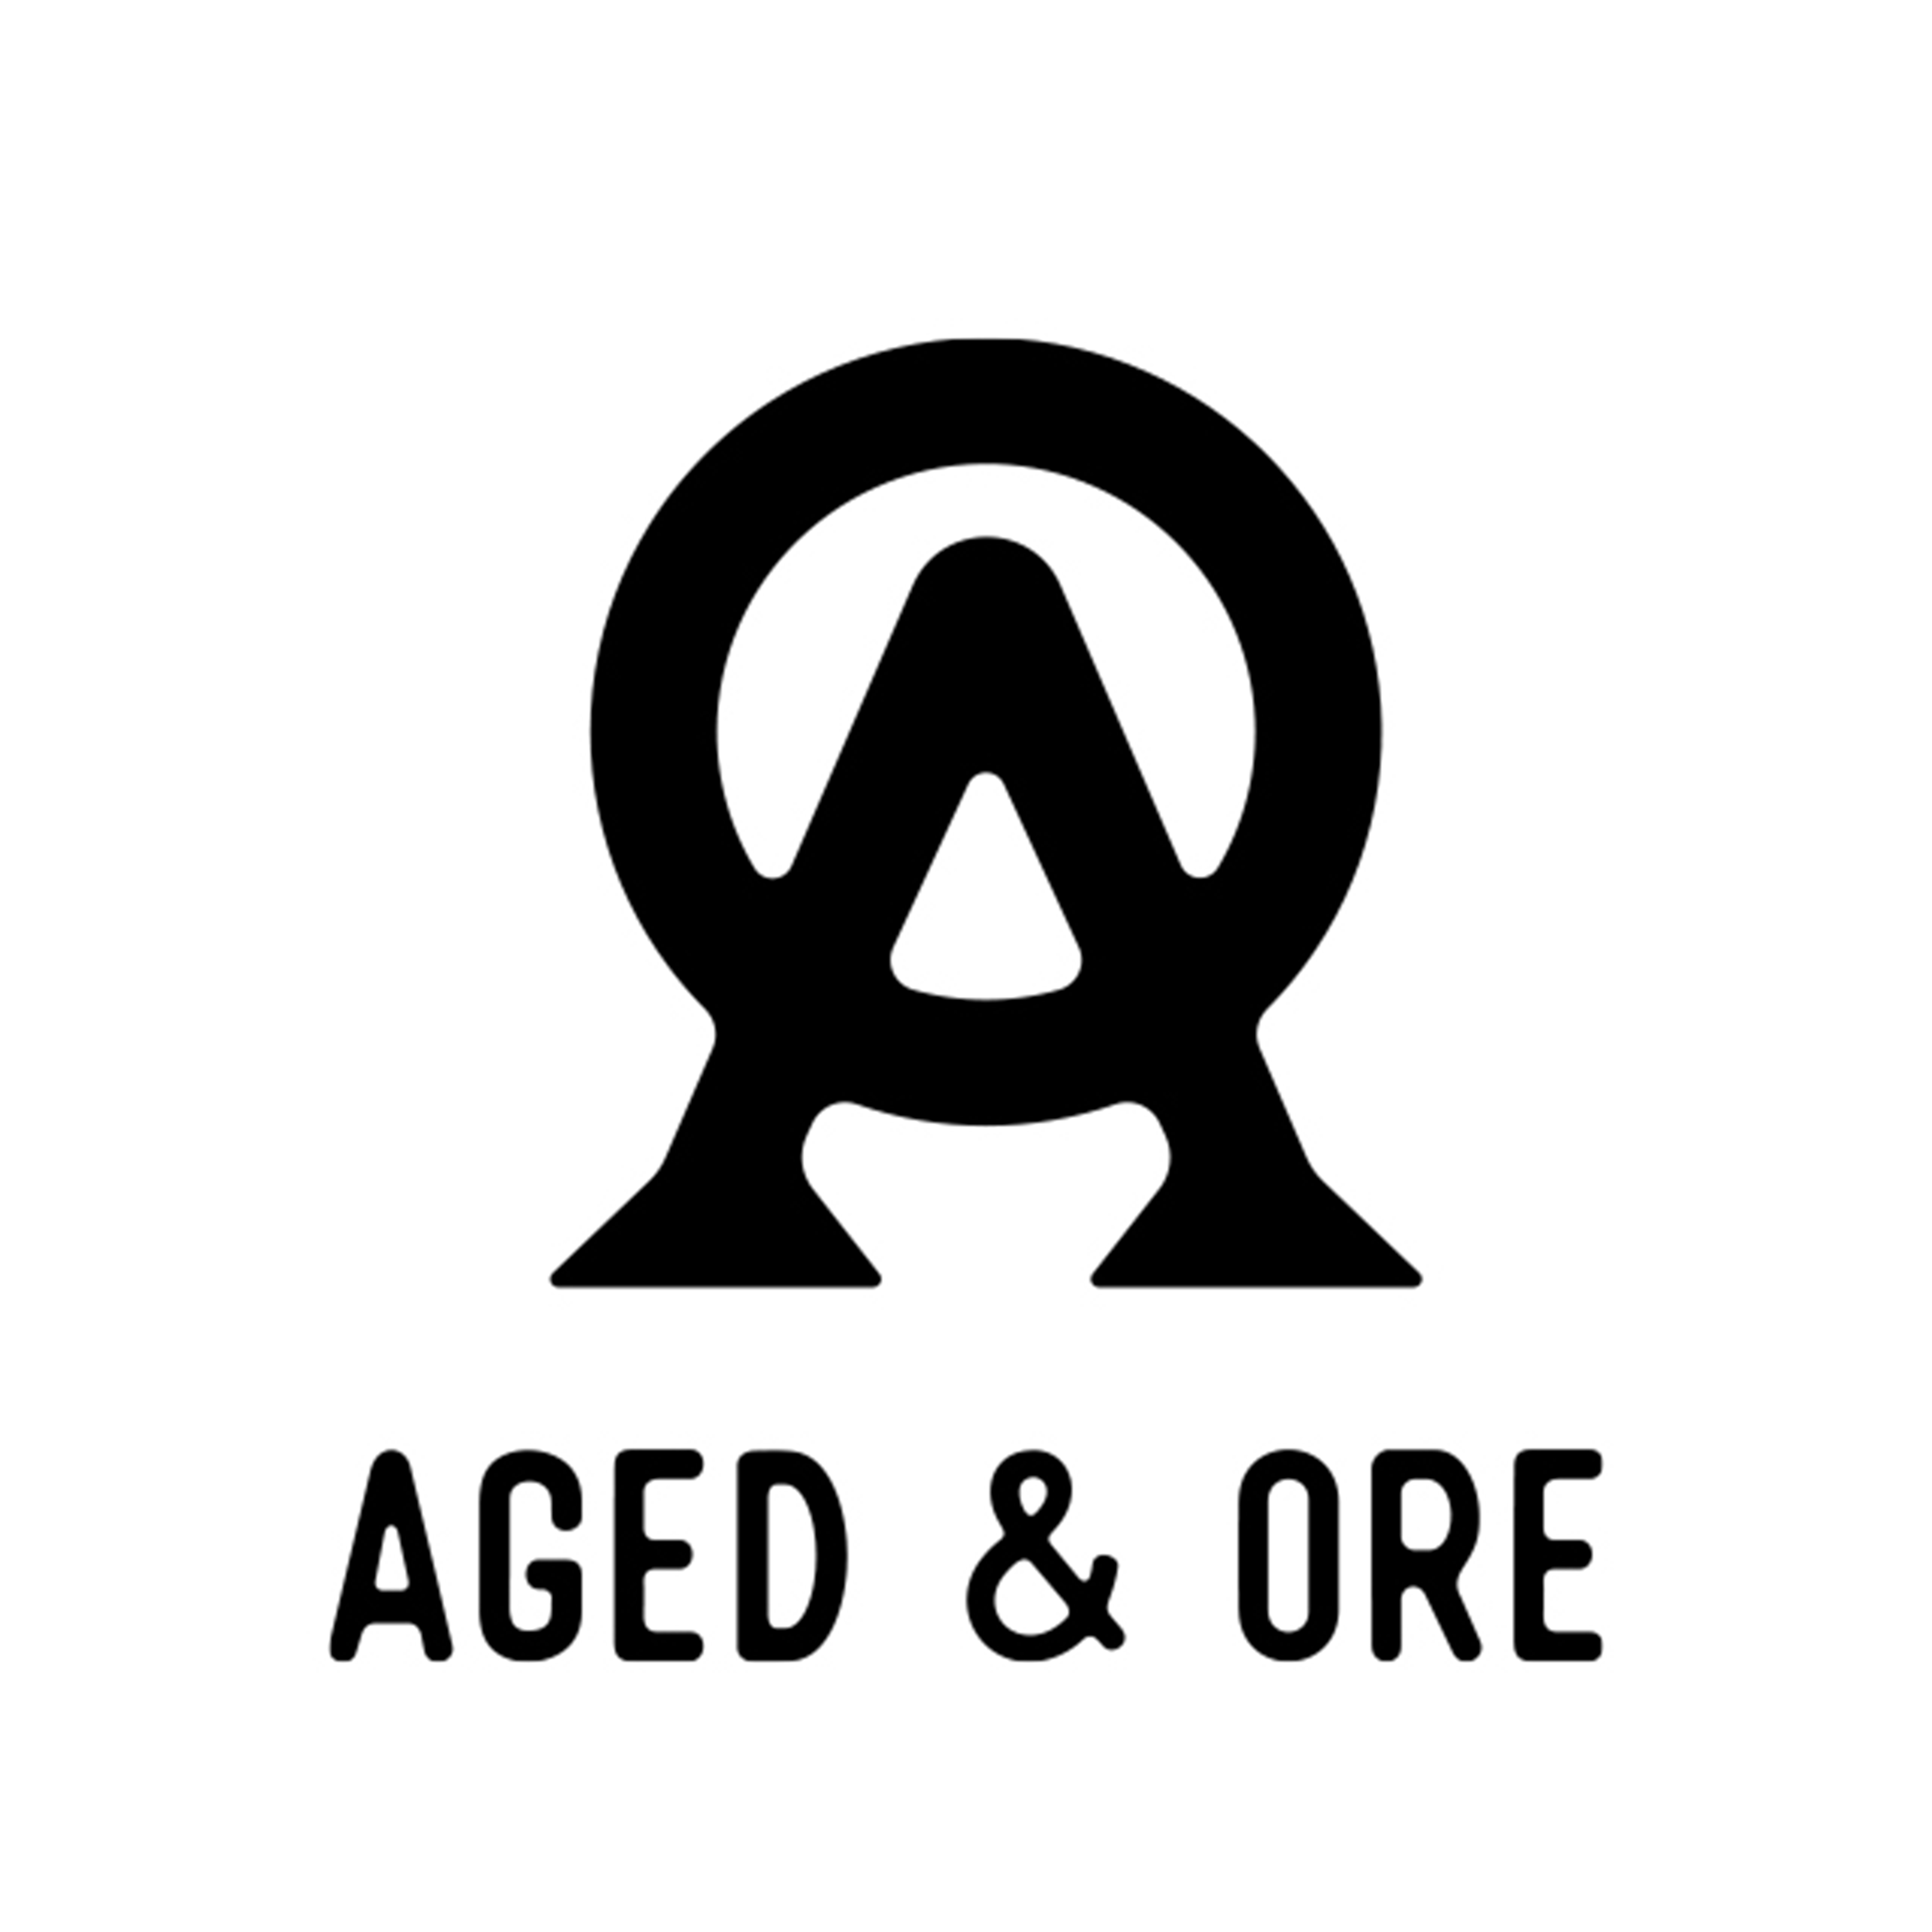 Aged & Ore